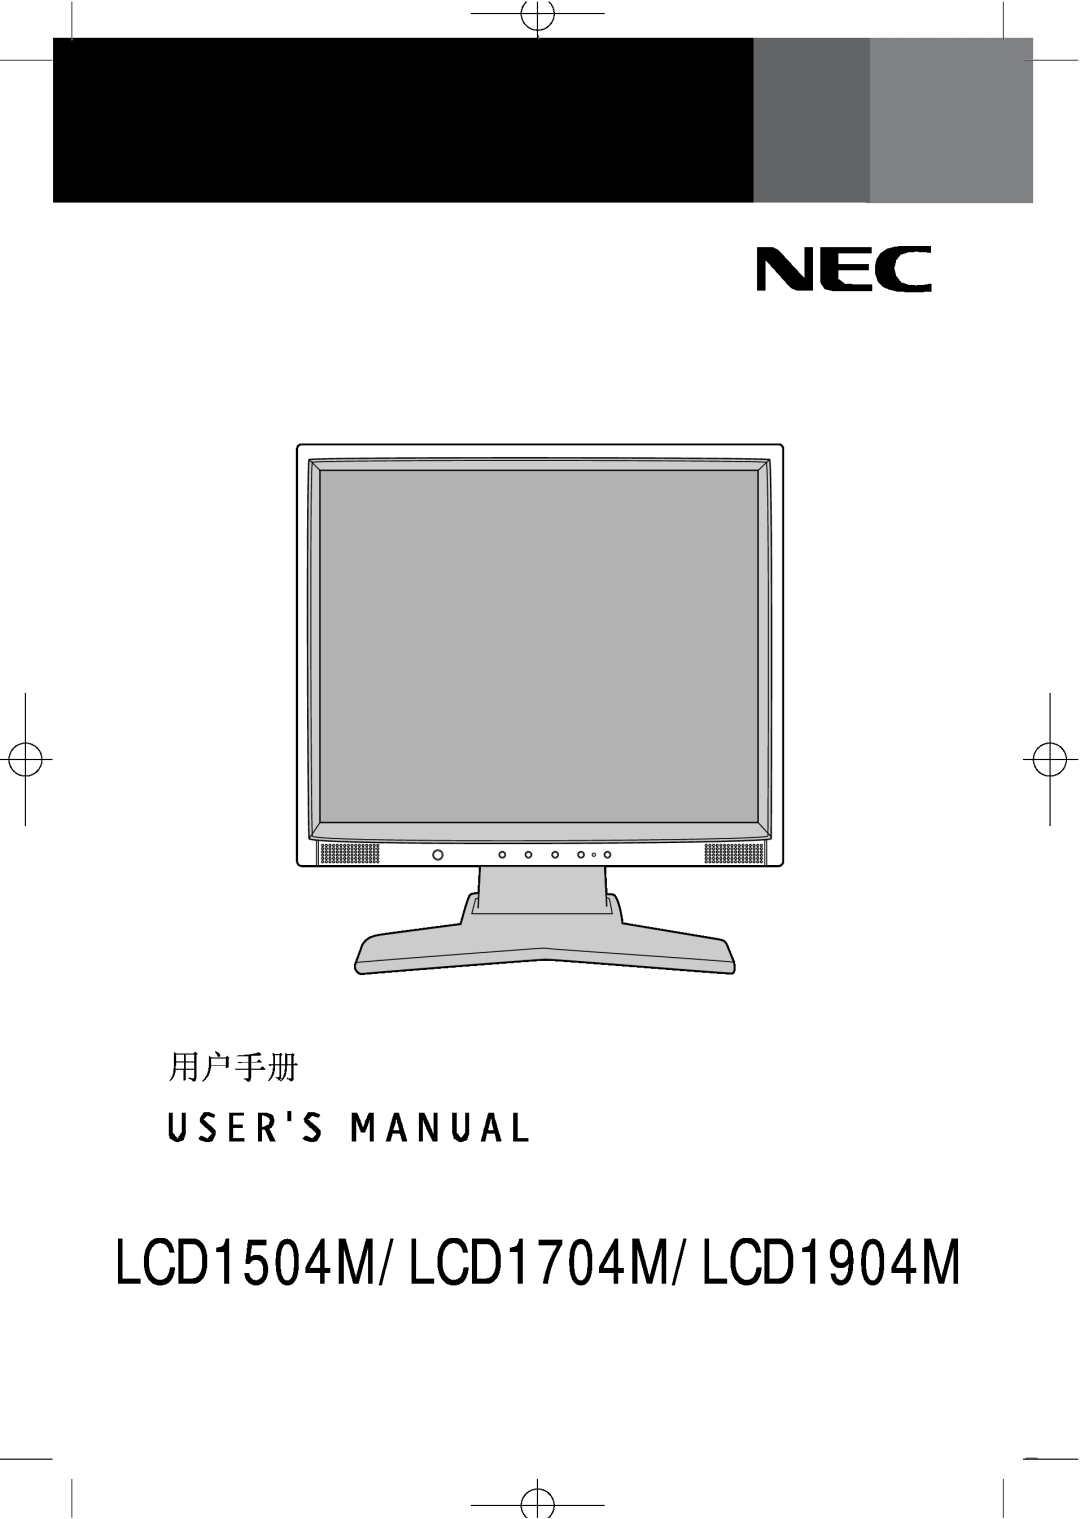 NEC manual LCD1504M/LCD1704M/LCD1904M, 用户手册 